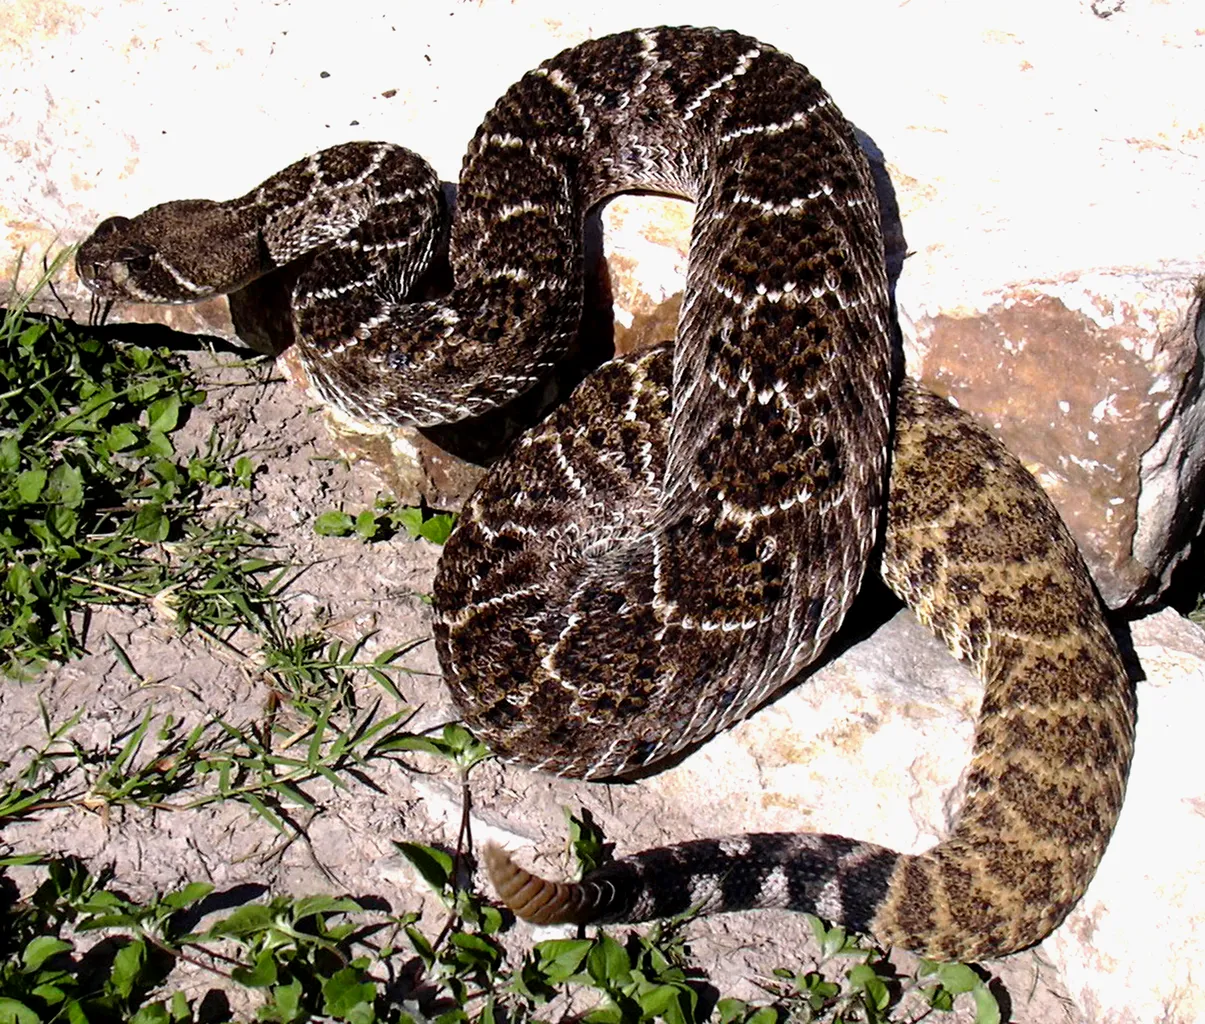 Black Diamondback Rattlesnake Facts